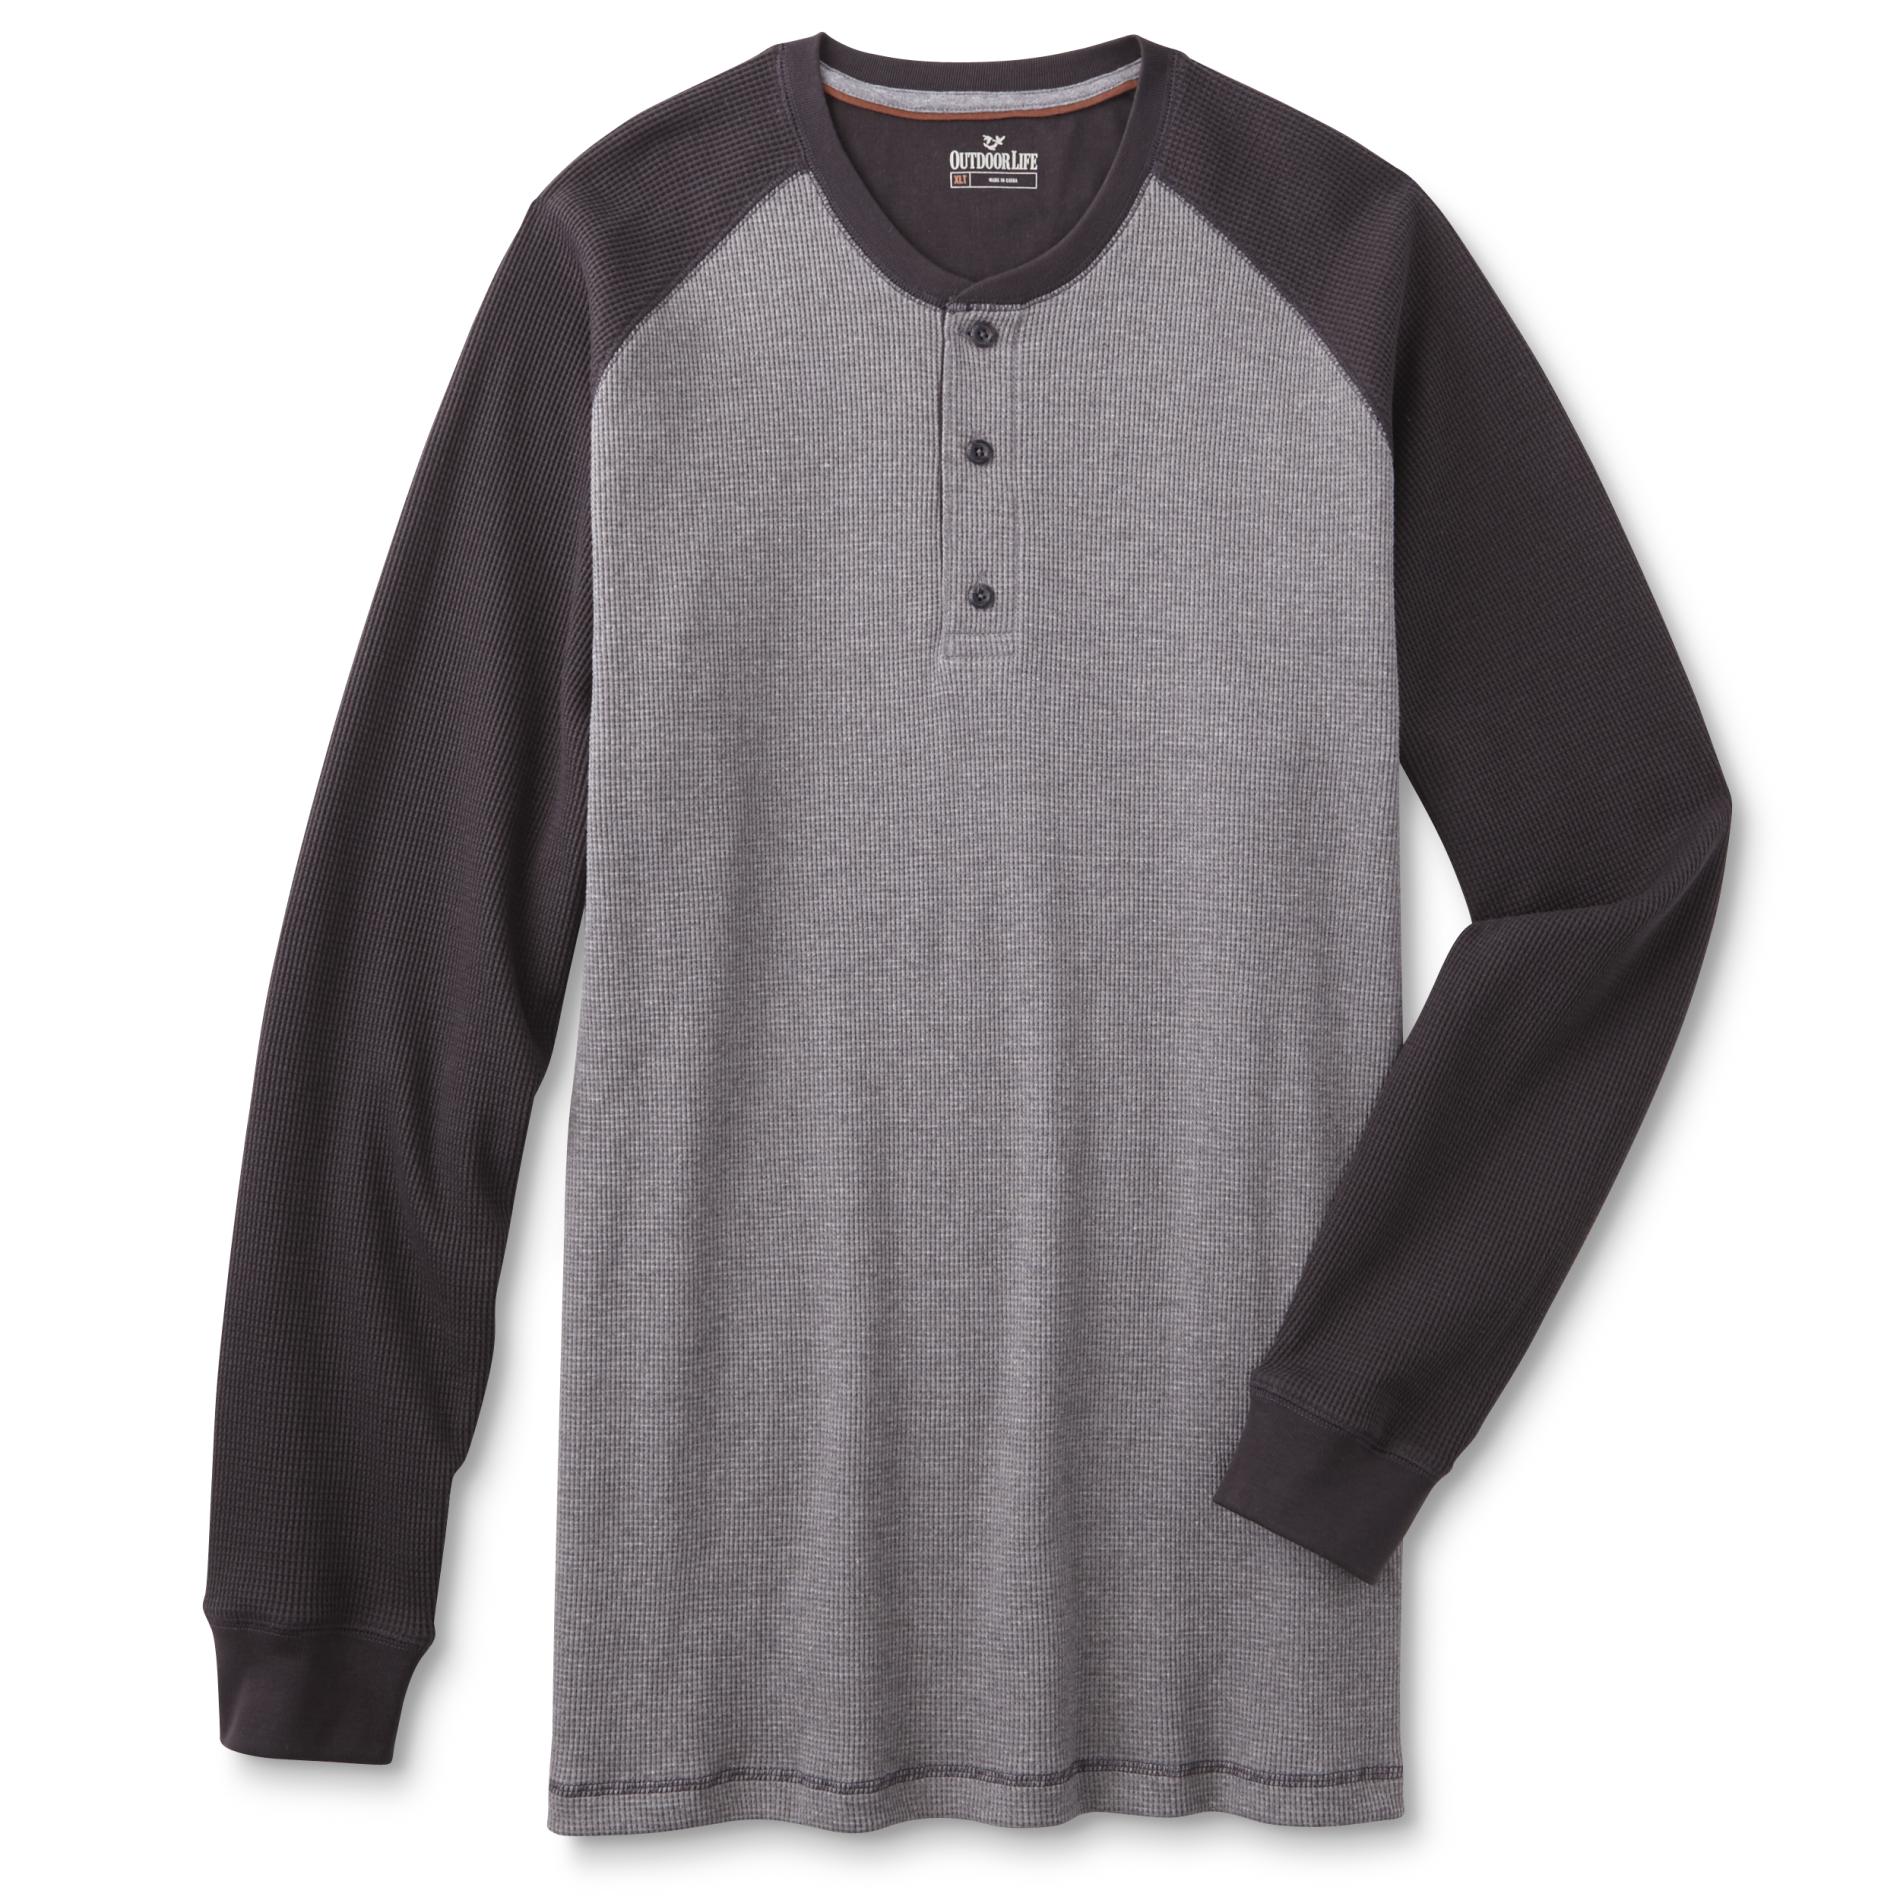 Outdoor Life Men's Big & Tall Thermal Henley Shirt - Colorblock | Shop ...